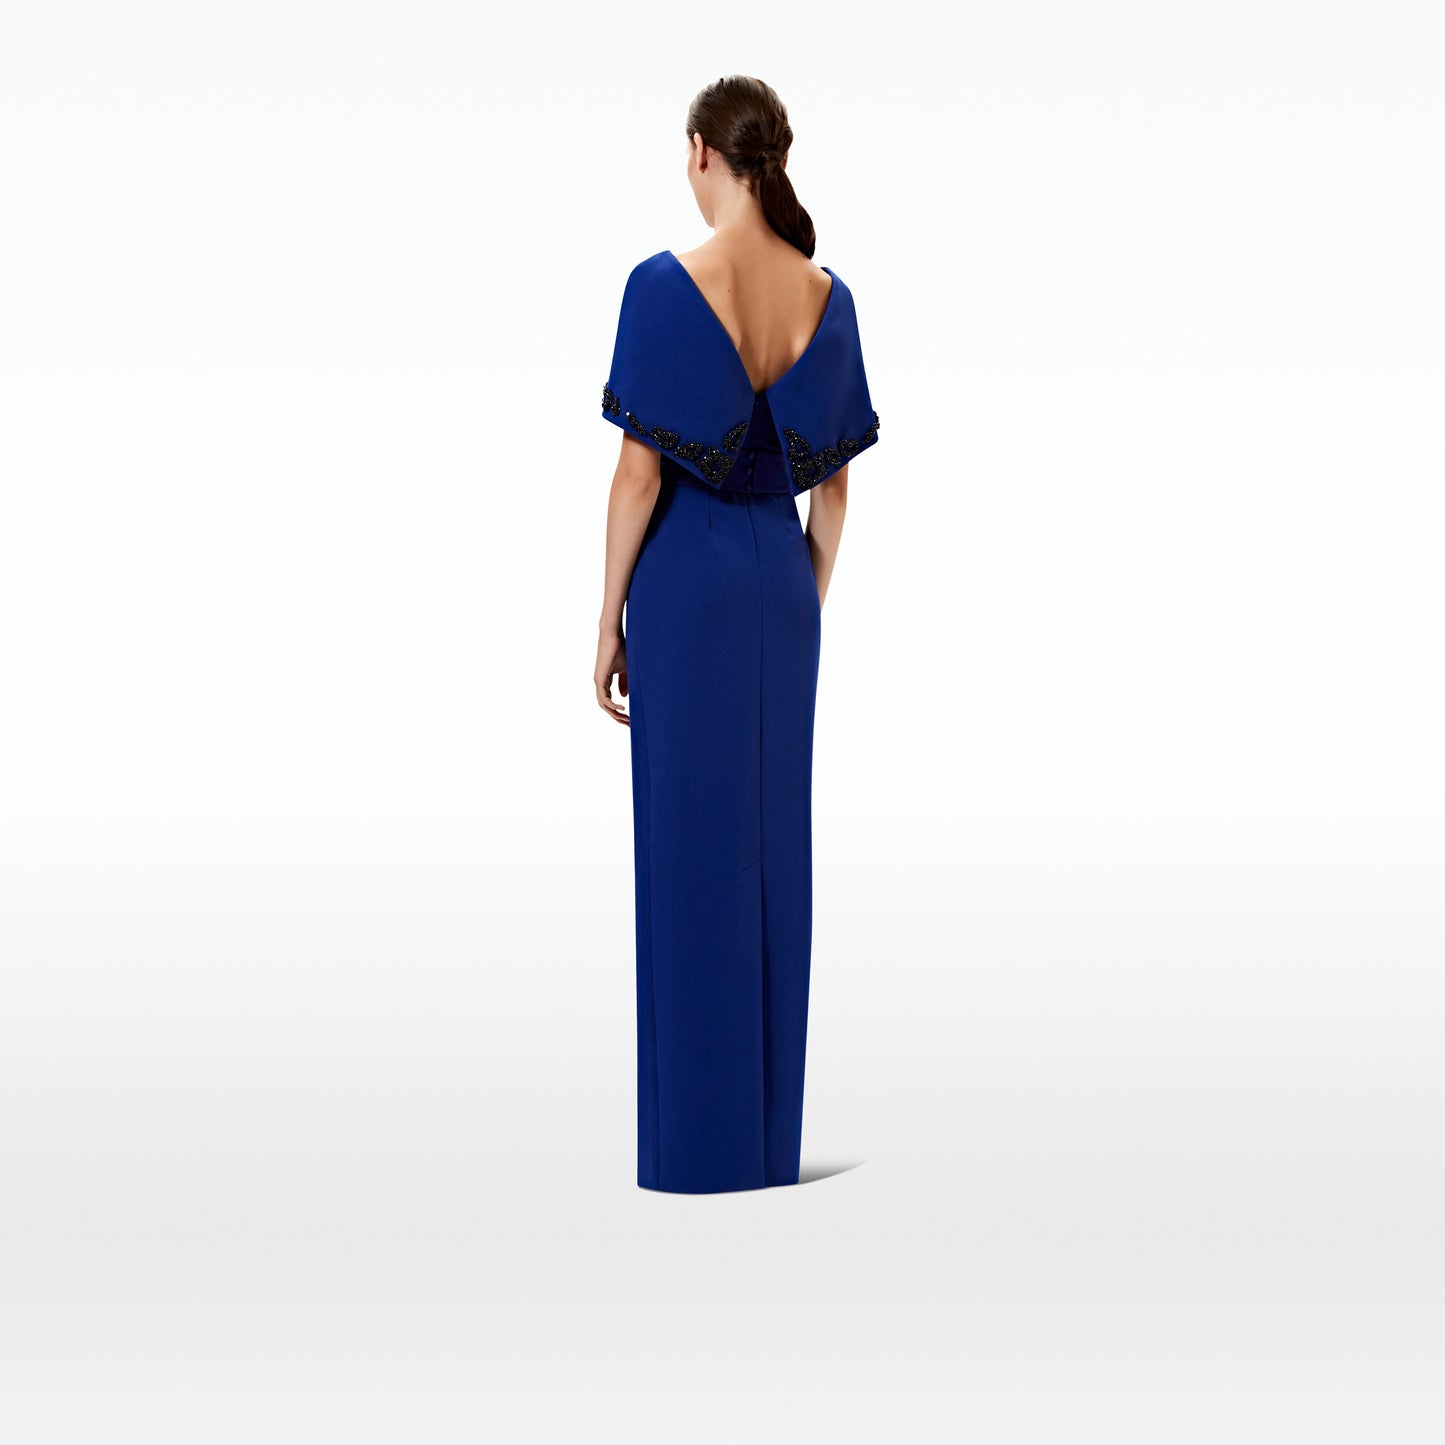 Aurora Skiathos Blue Long Dress